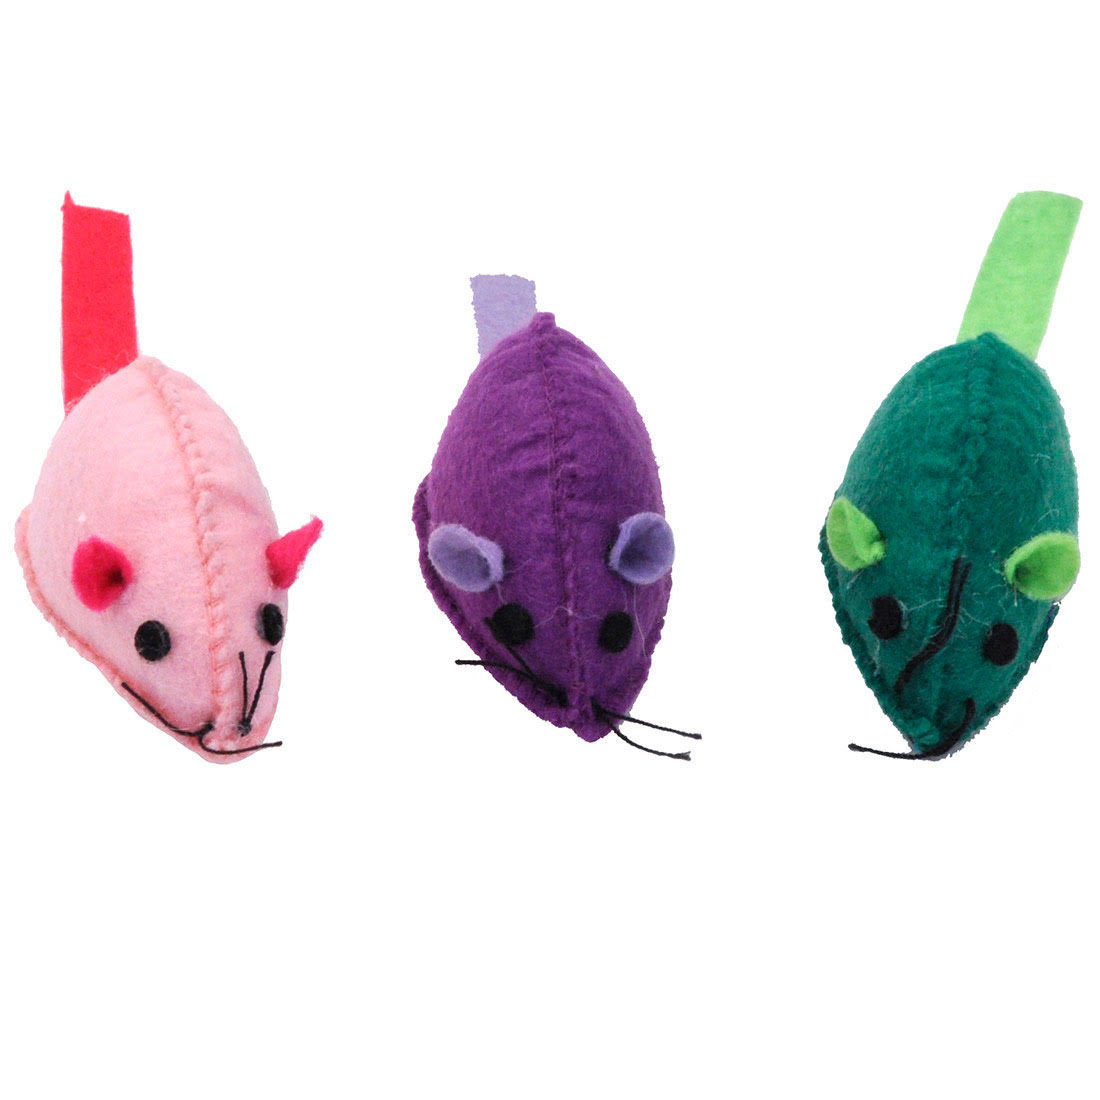 Turbo Felt Mice Cat Toy, Assorted Colors